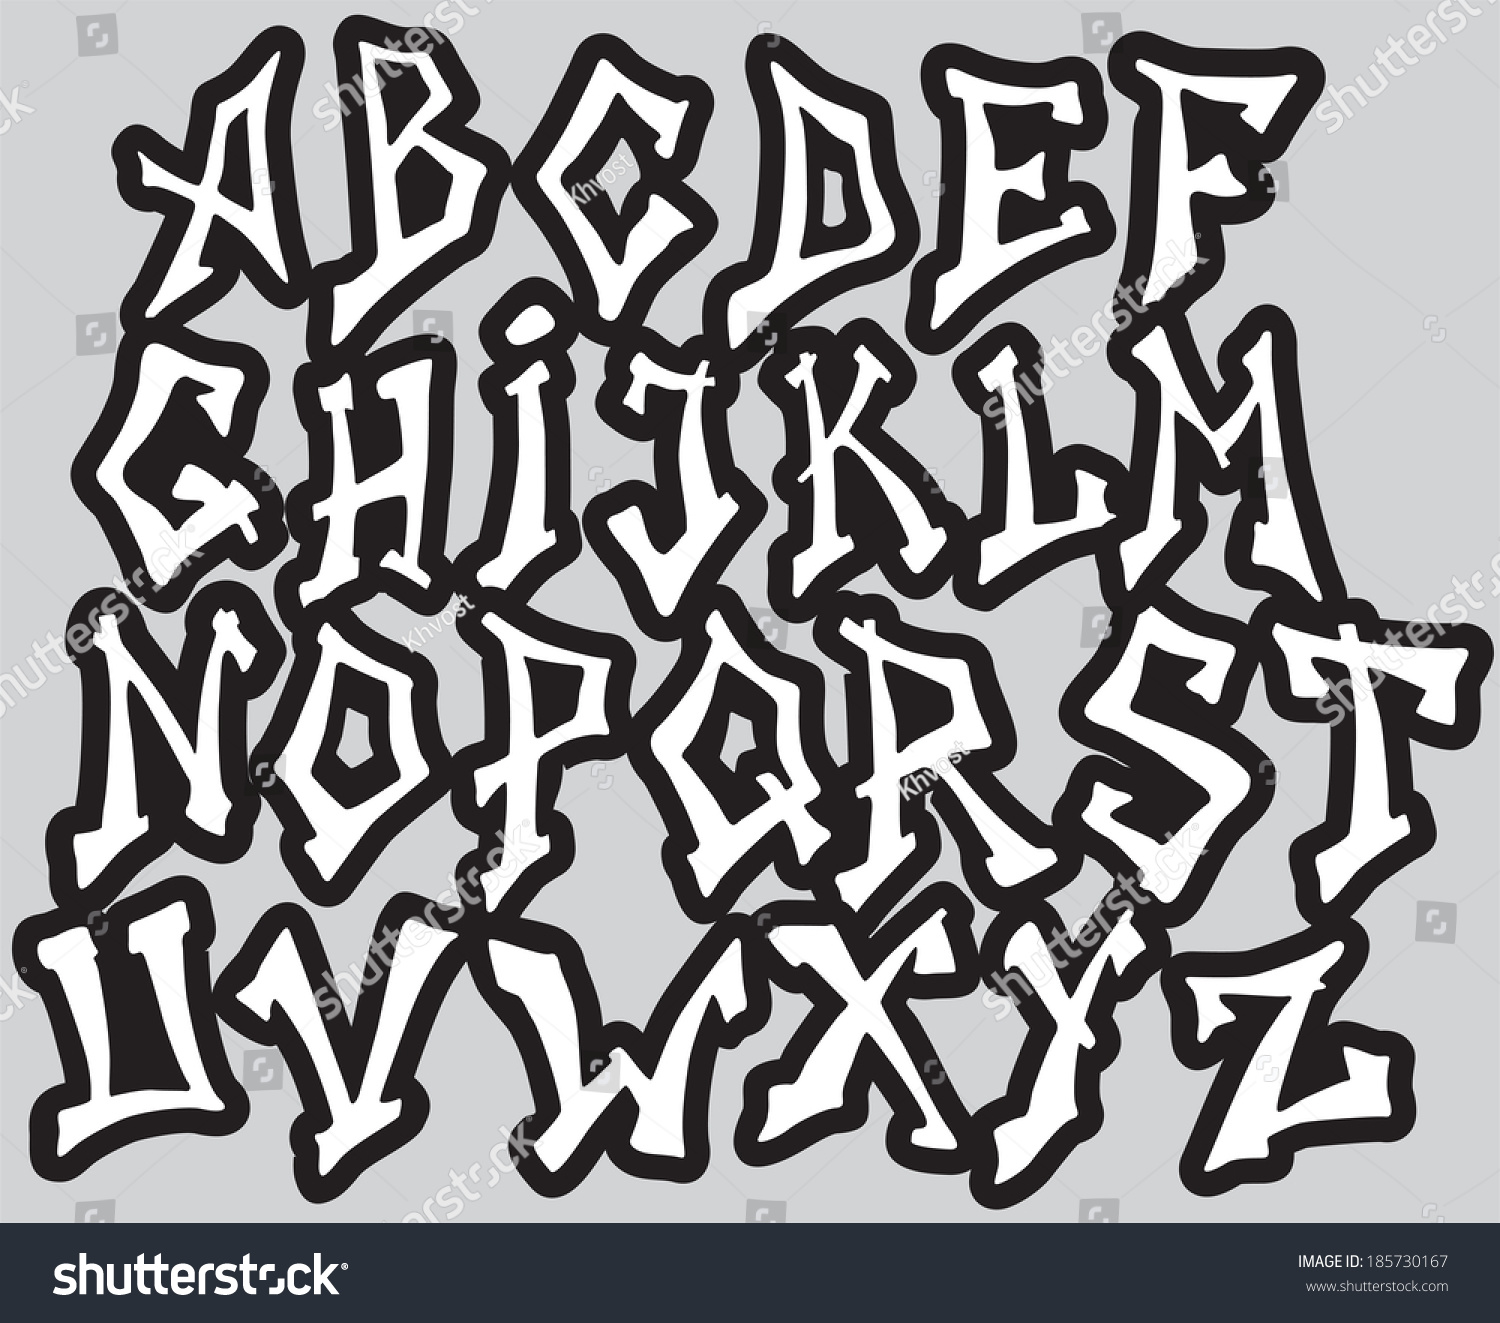 Graffiti Font Alphabet Different Letters. Vector Illustration ...